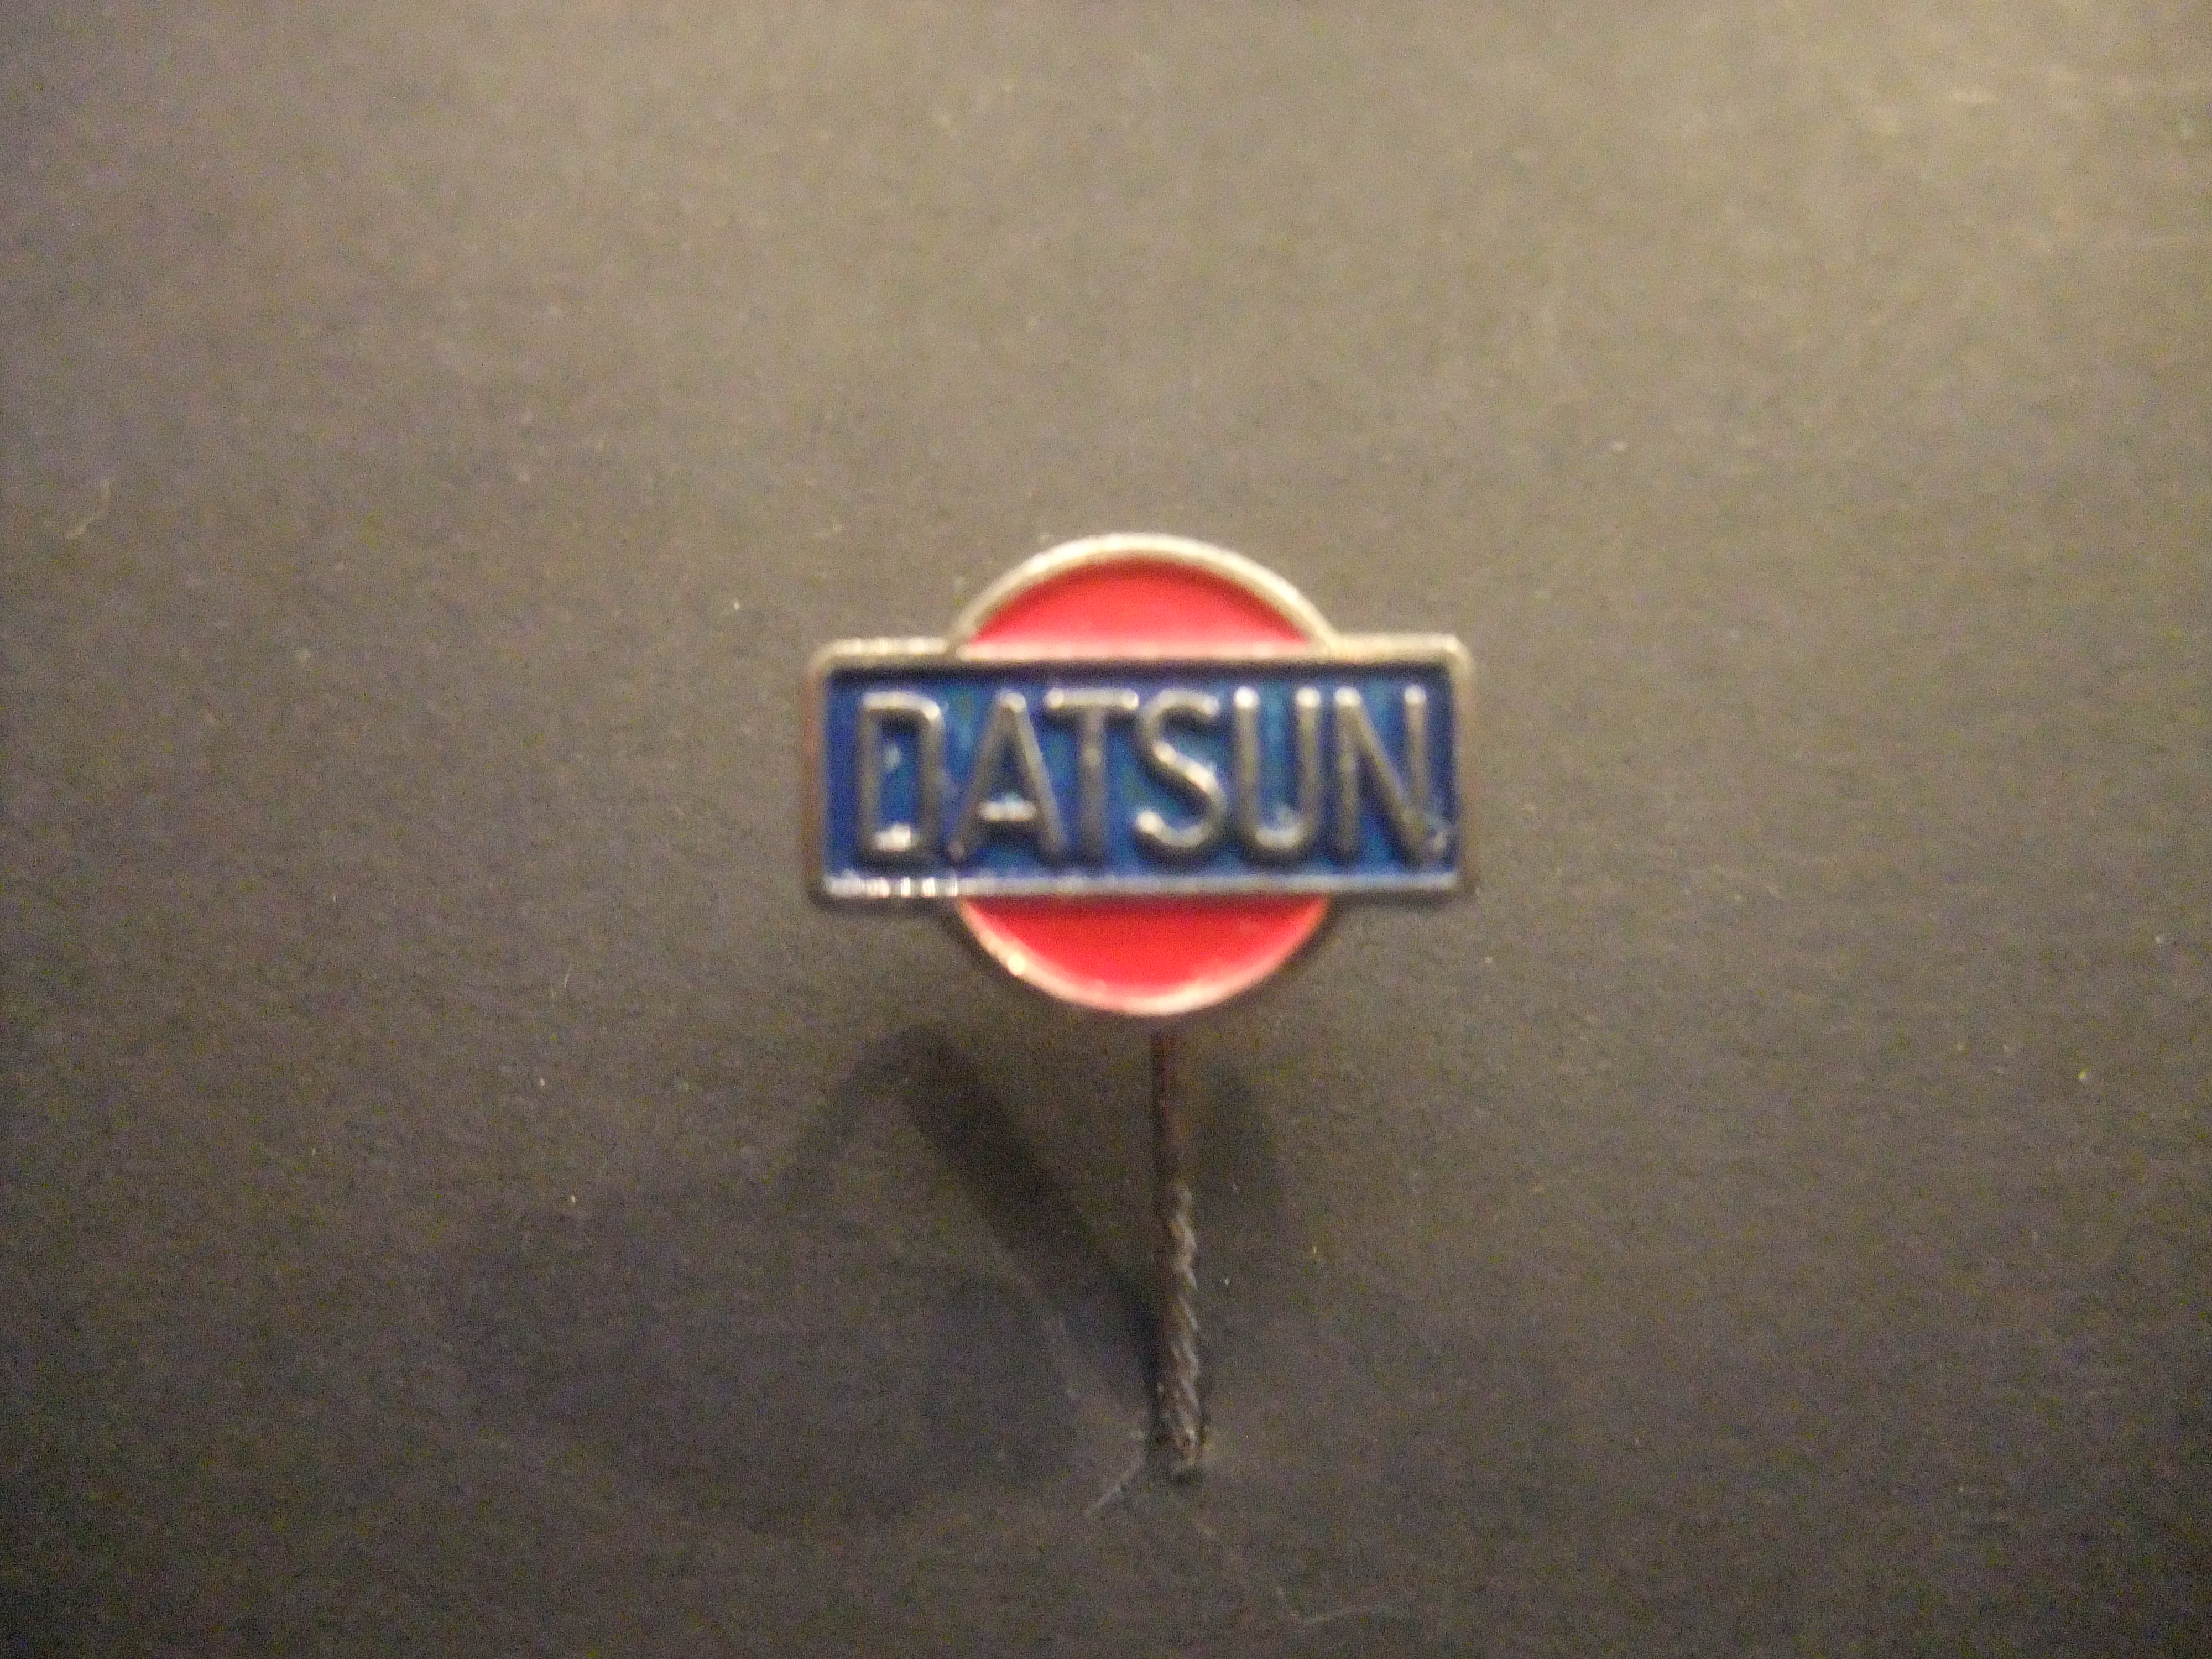 Datsun automerk van de Japanse autofabrikant Nissan Motor